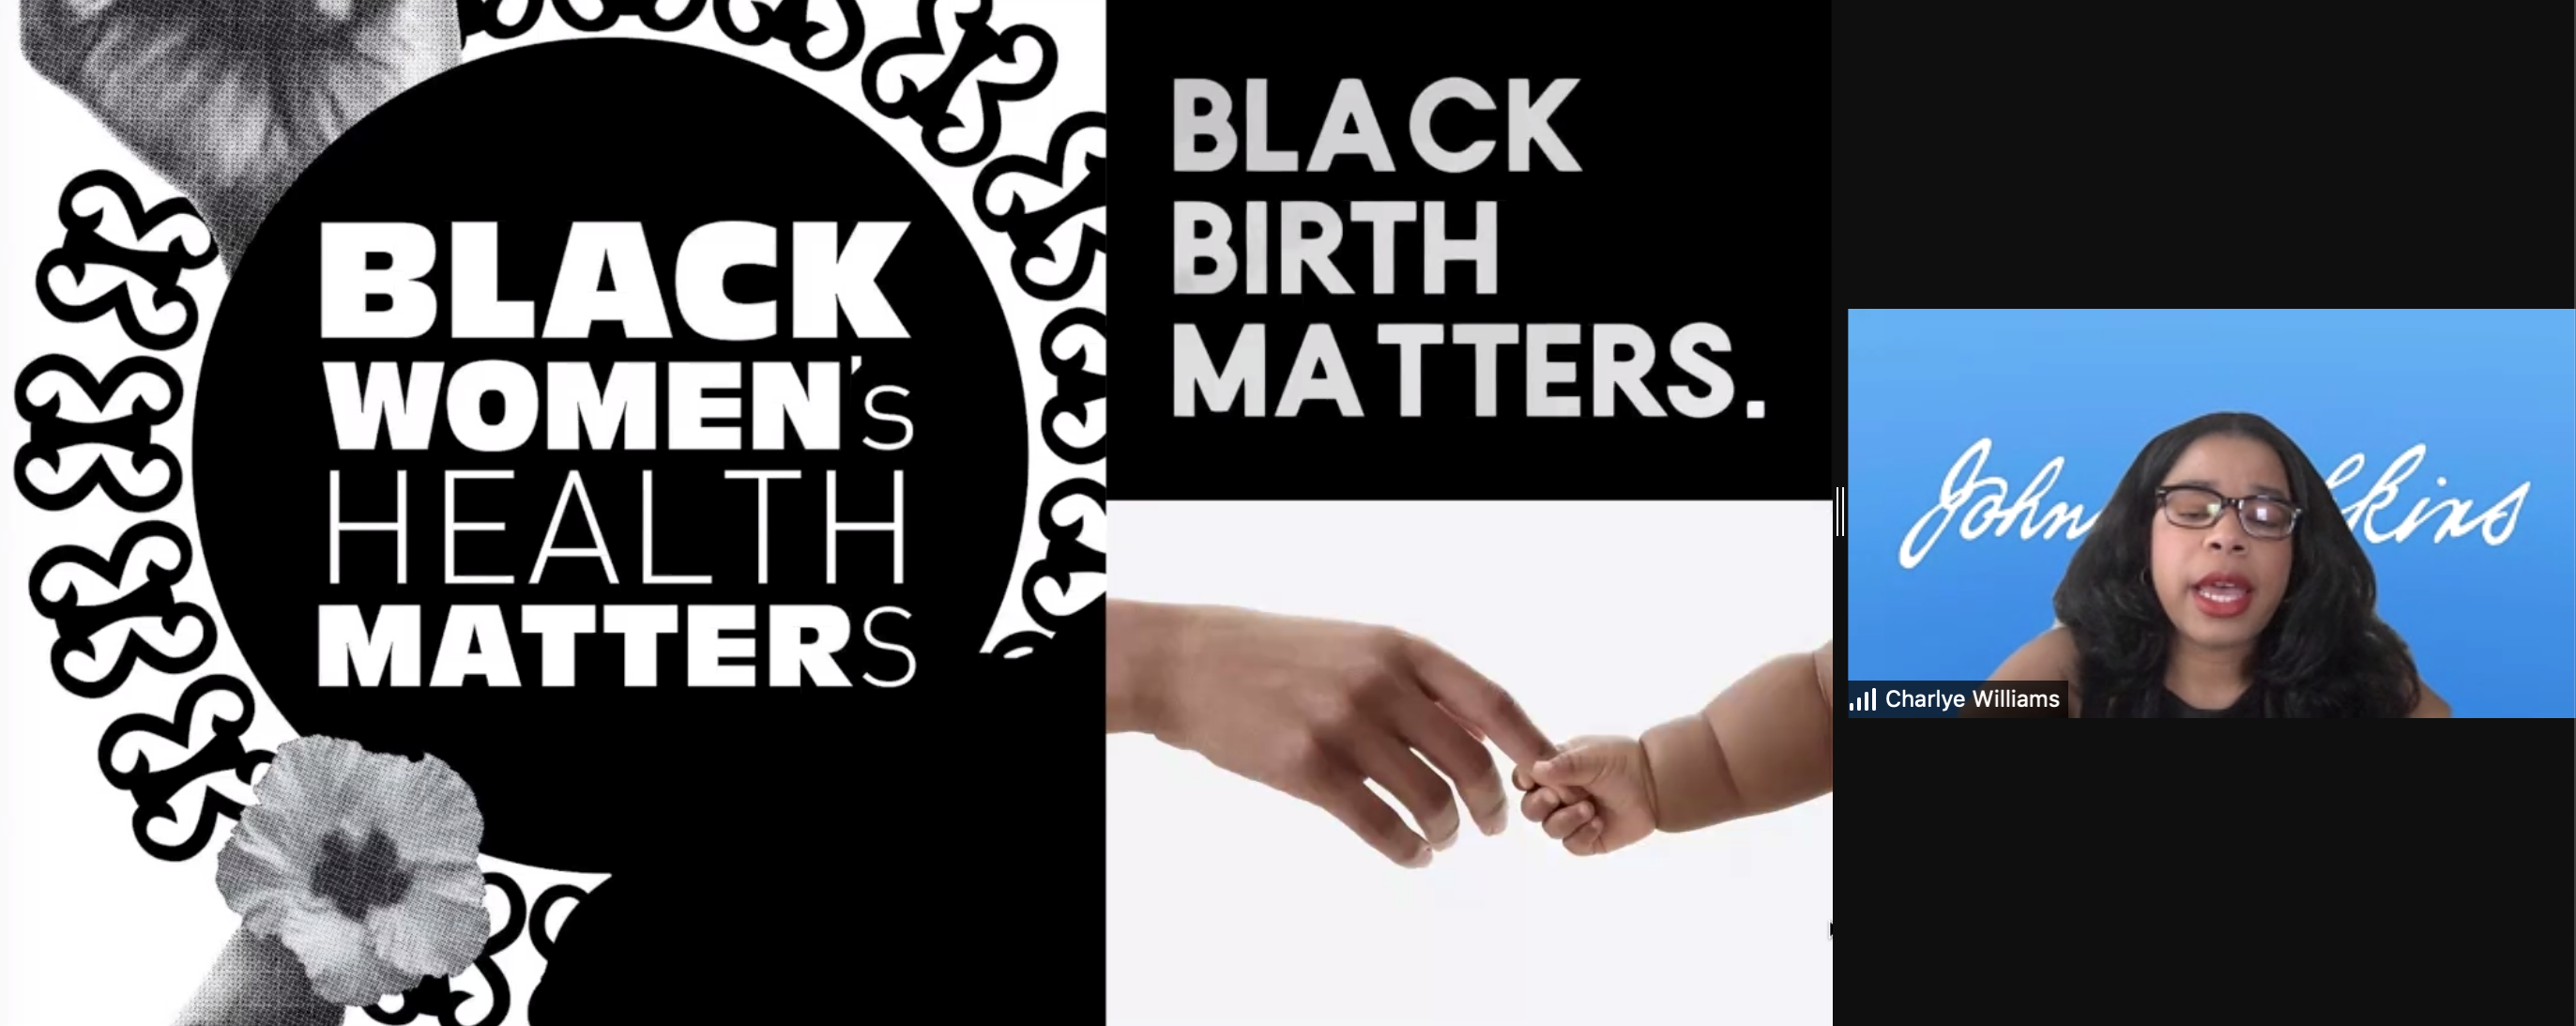 Charlye Williams Presentation Screenshot - Black Birth Matters